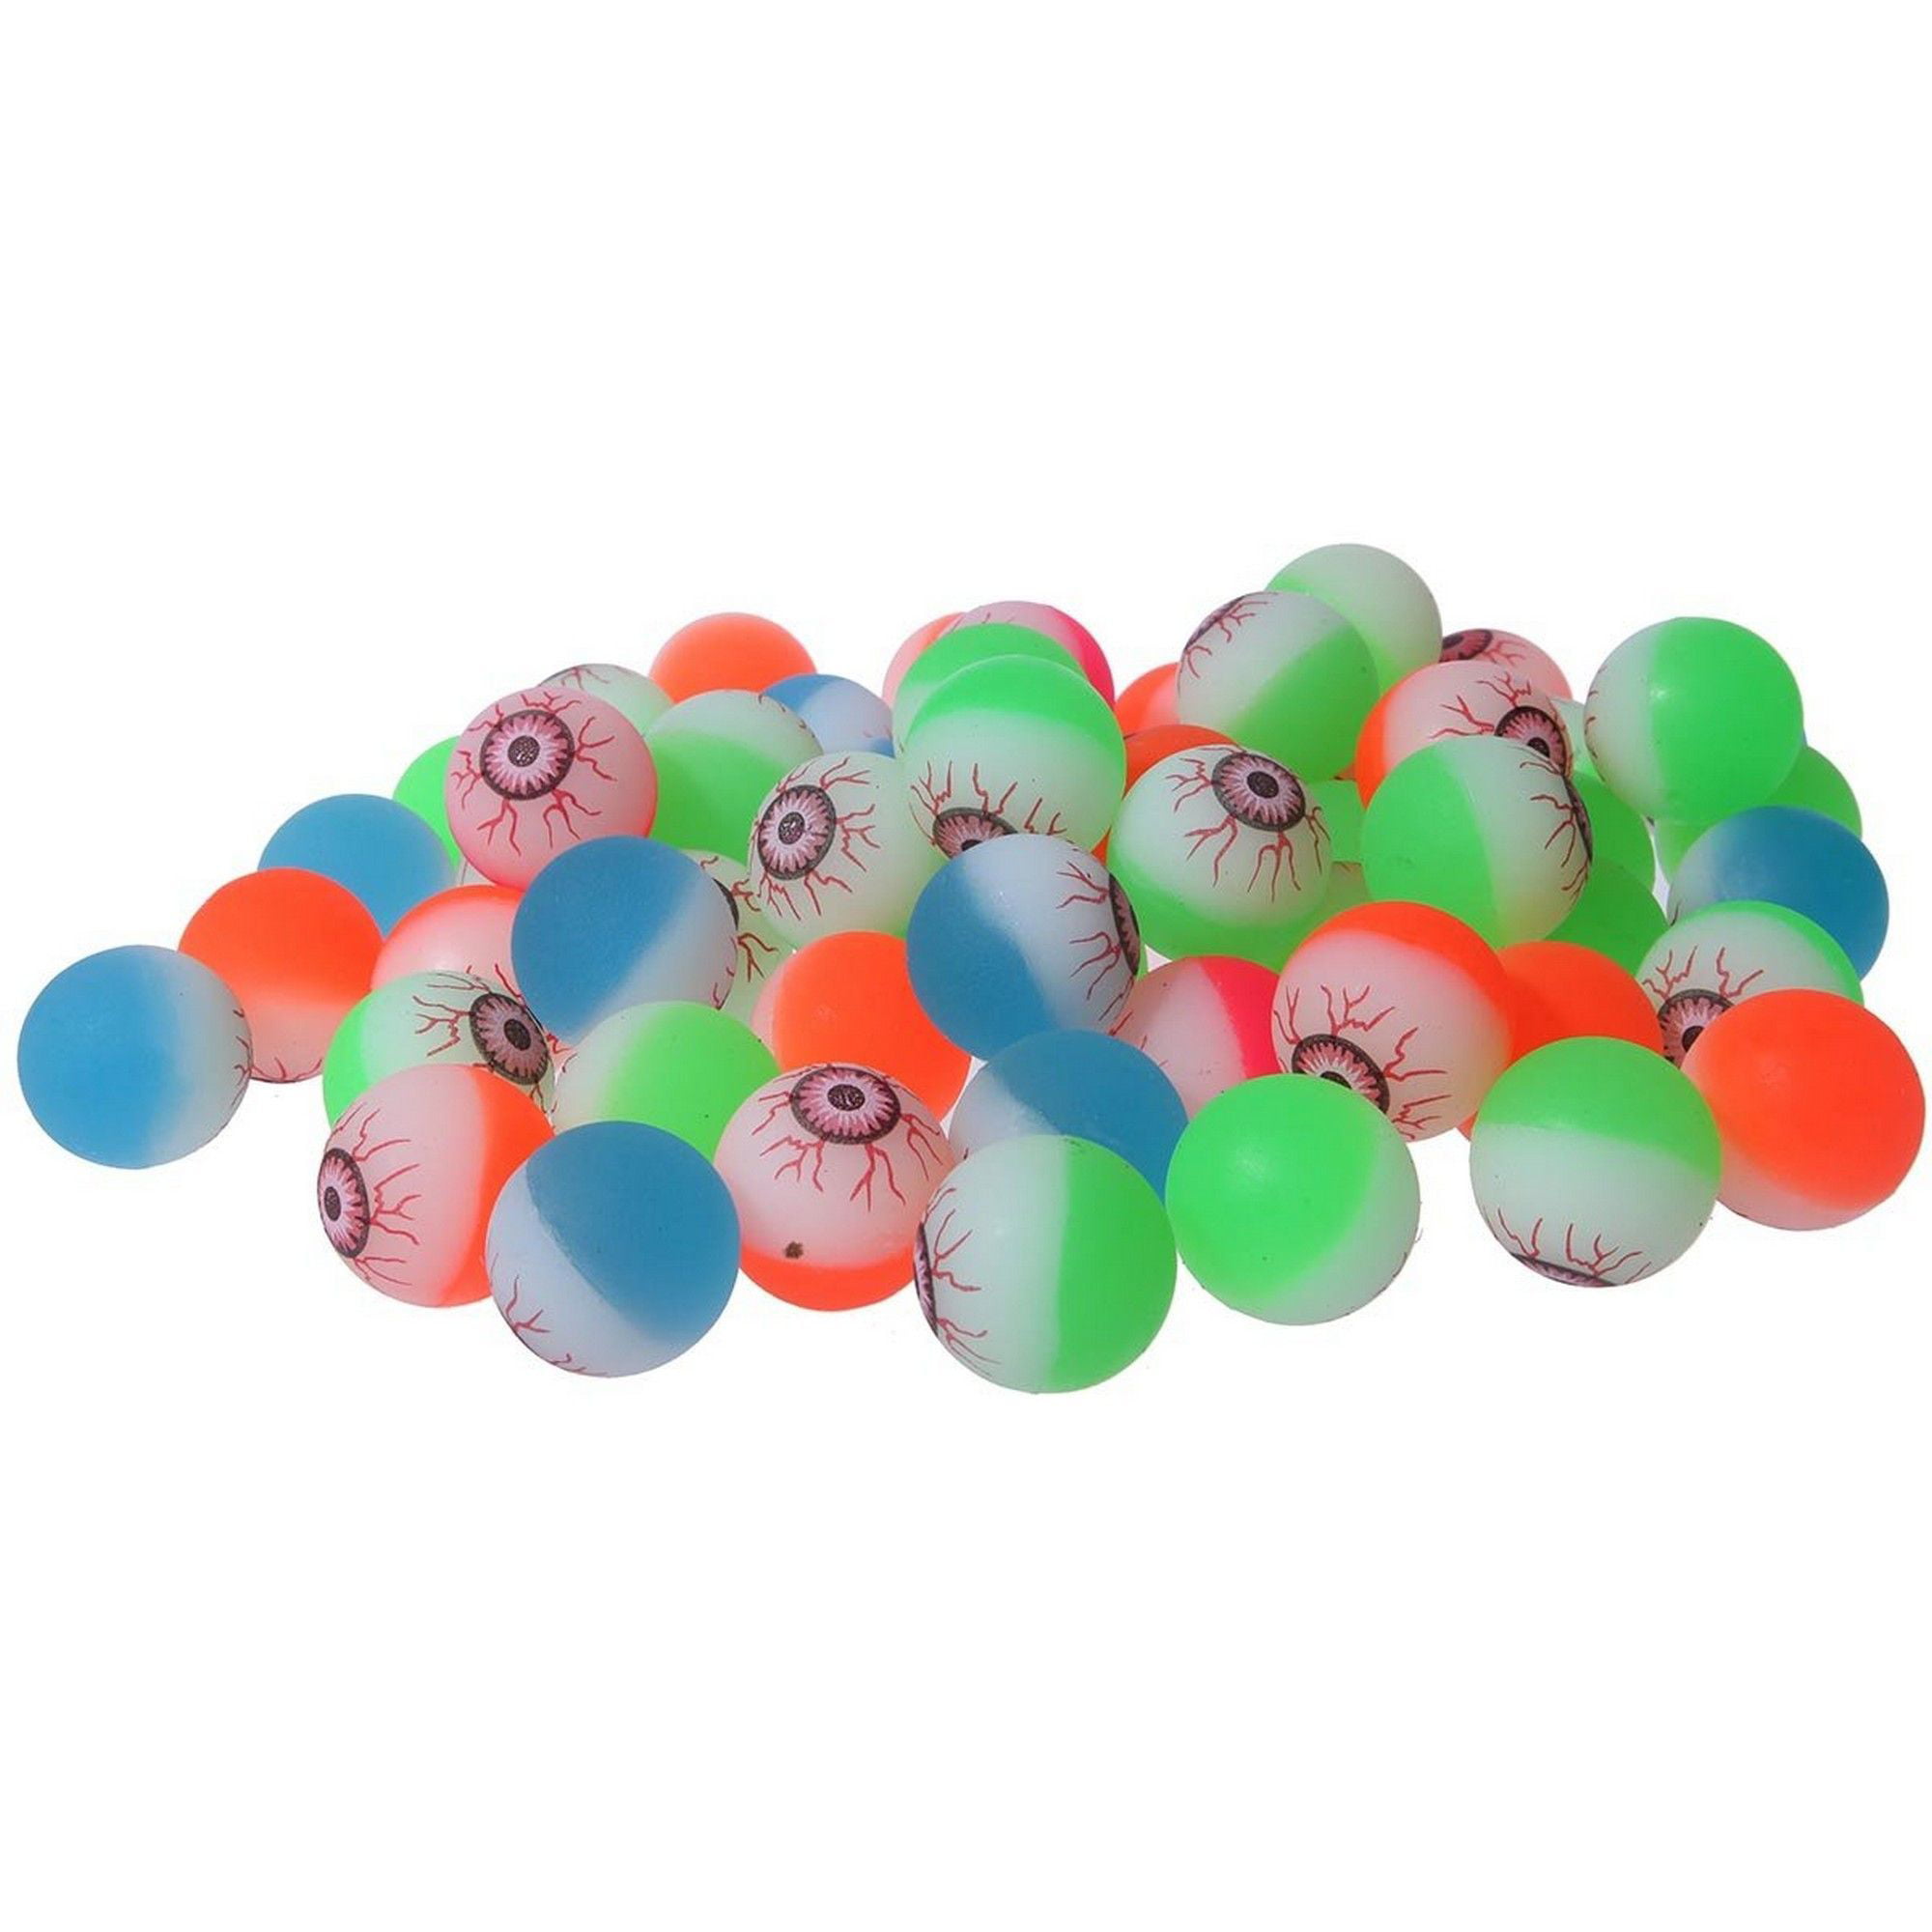 Party balls